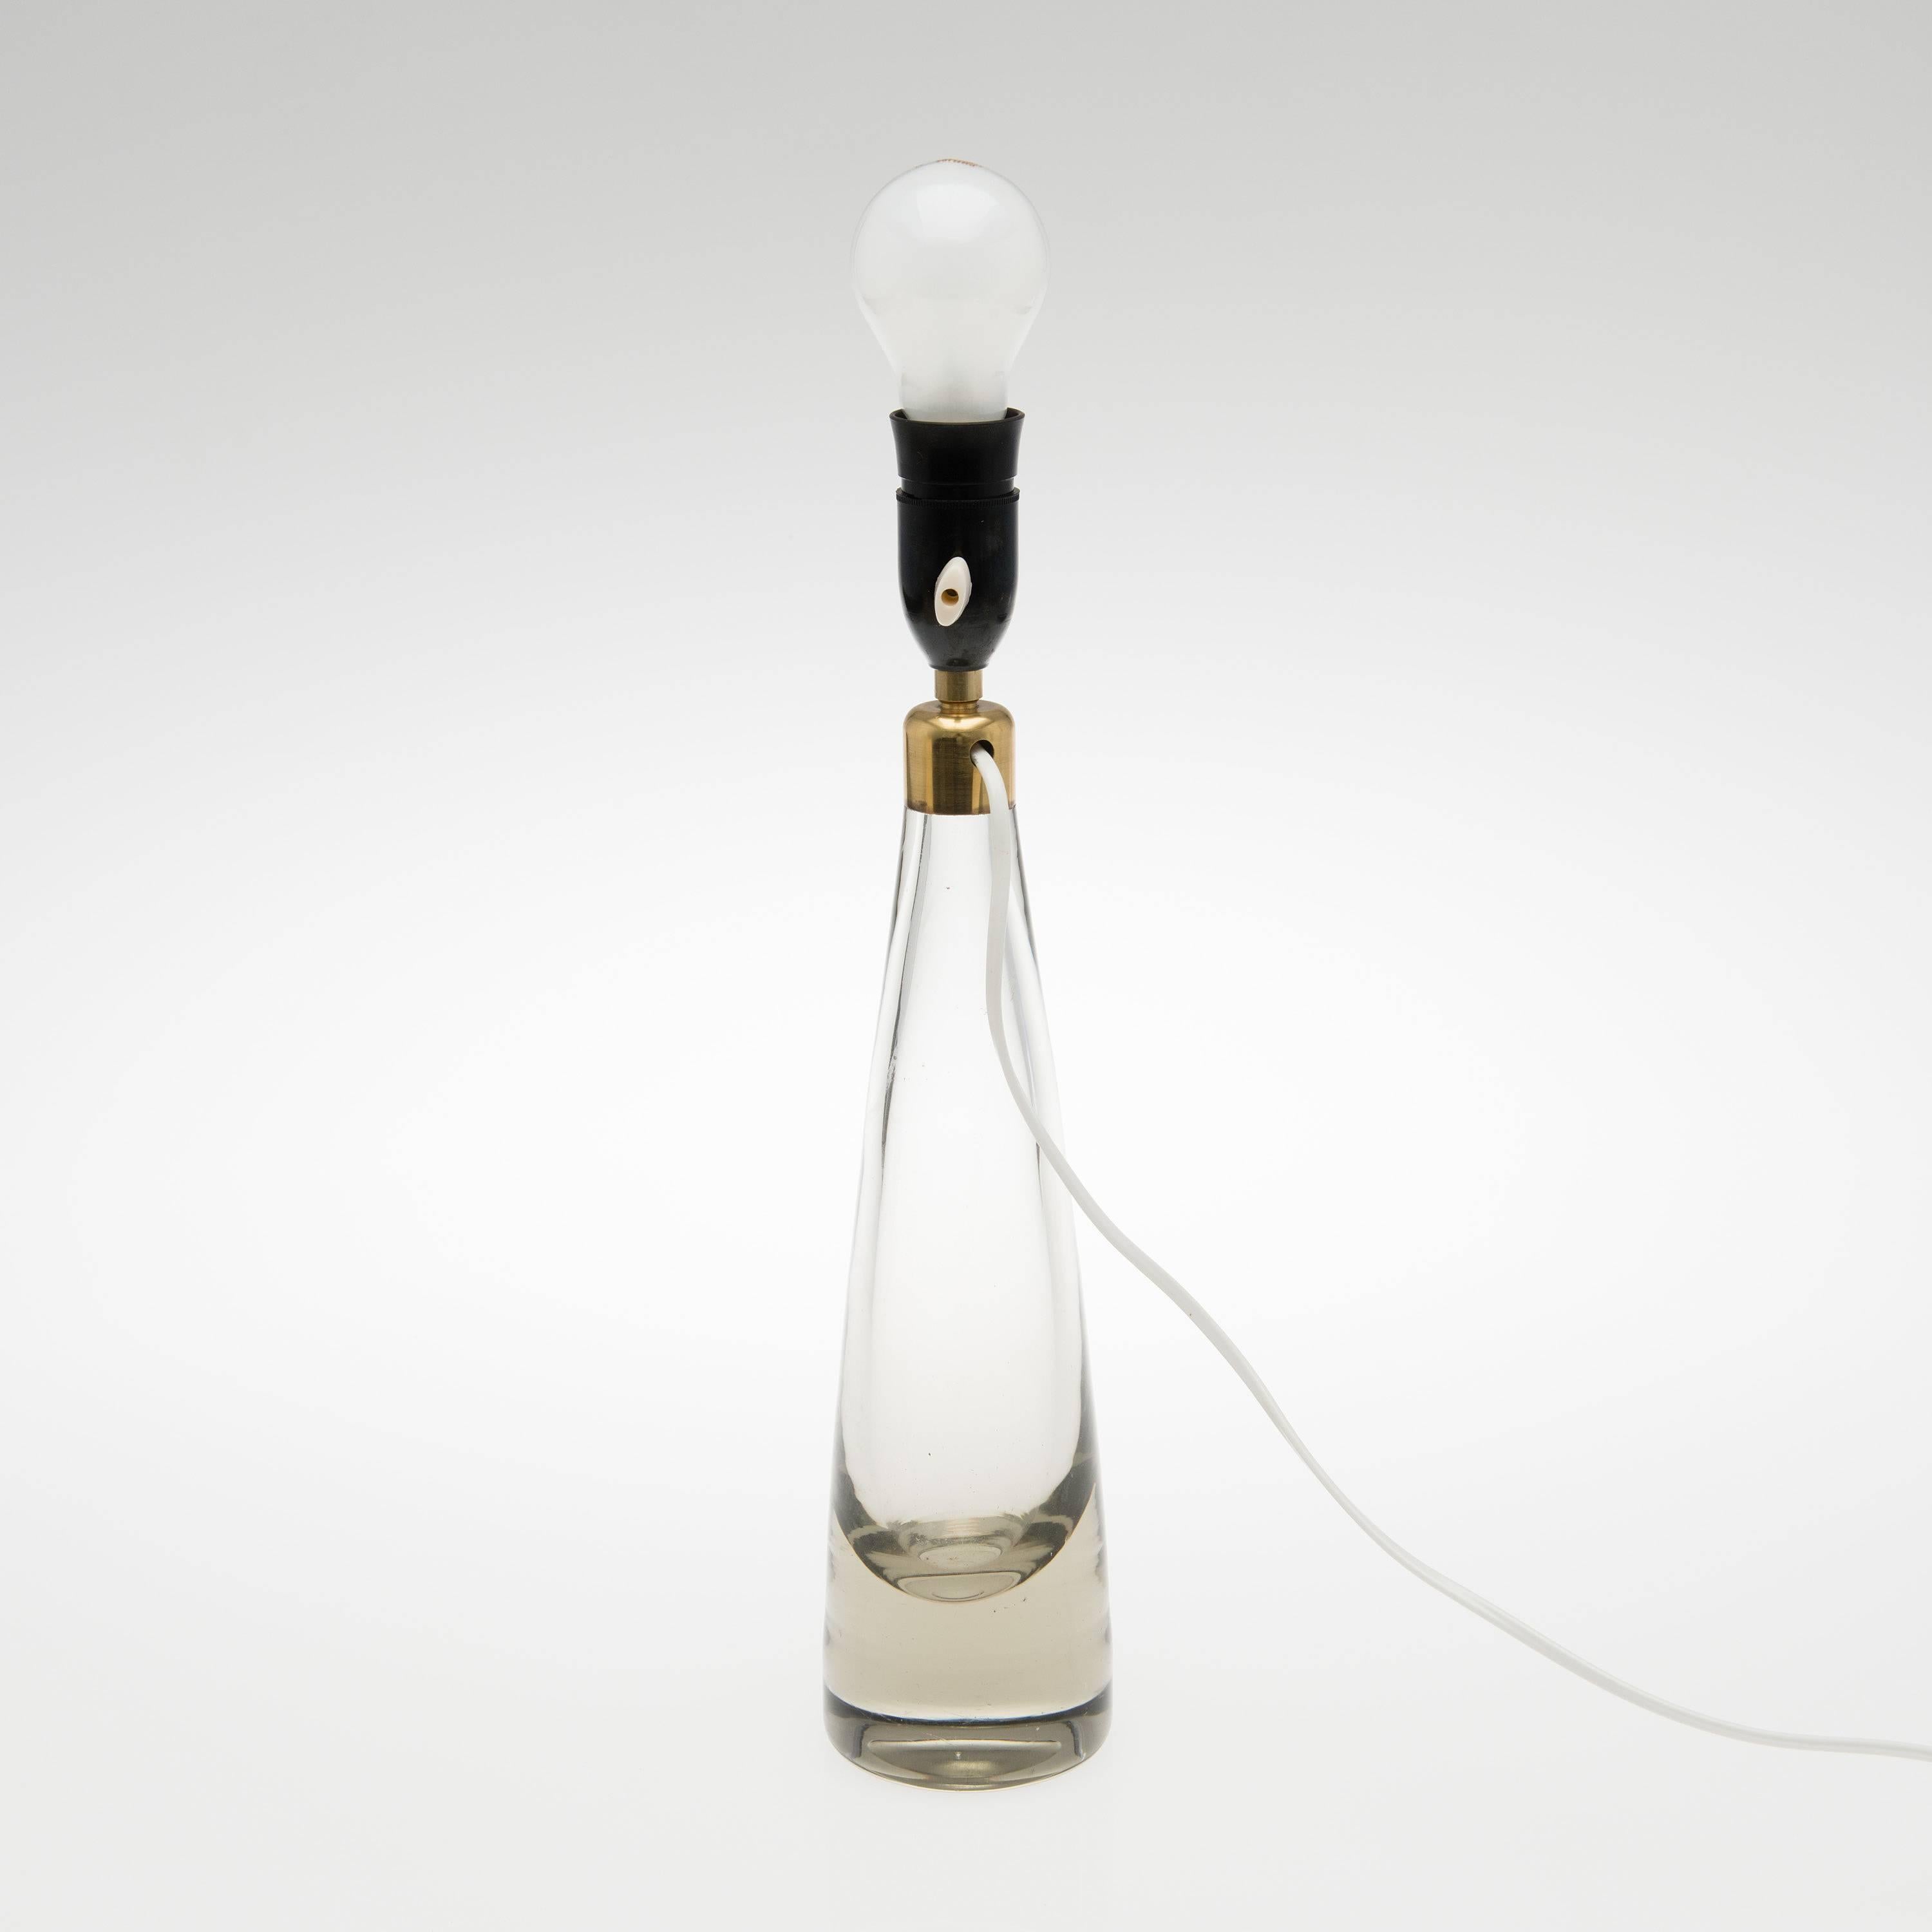 Scandinavian Modern Mid-20th Century Lisa Johansson-Pape Glass Table Lamp by Finish Orno